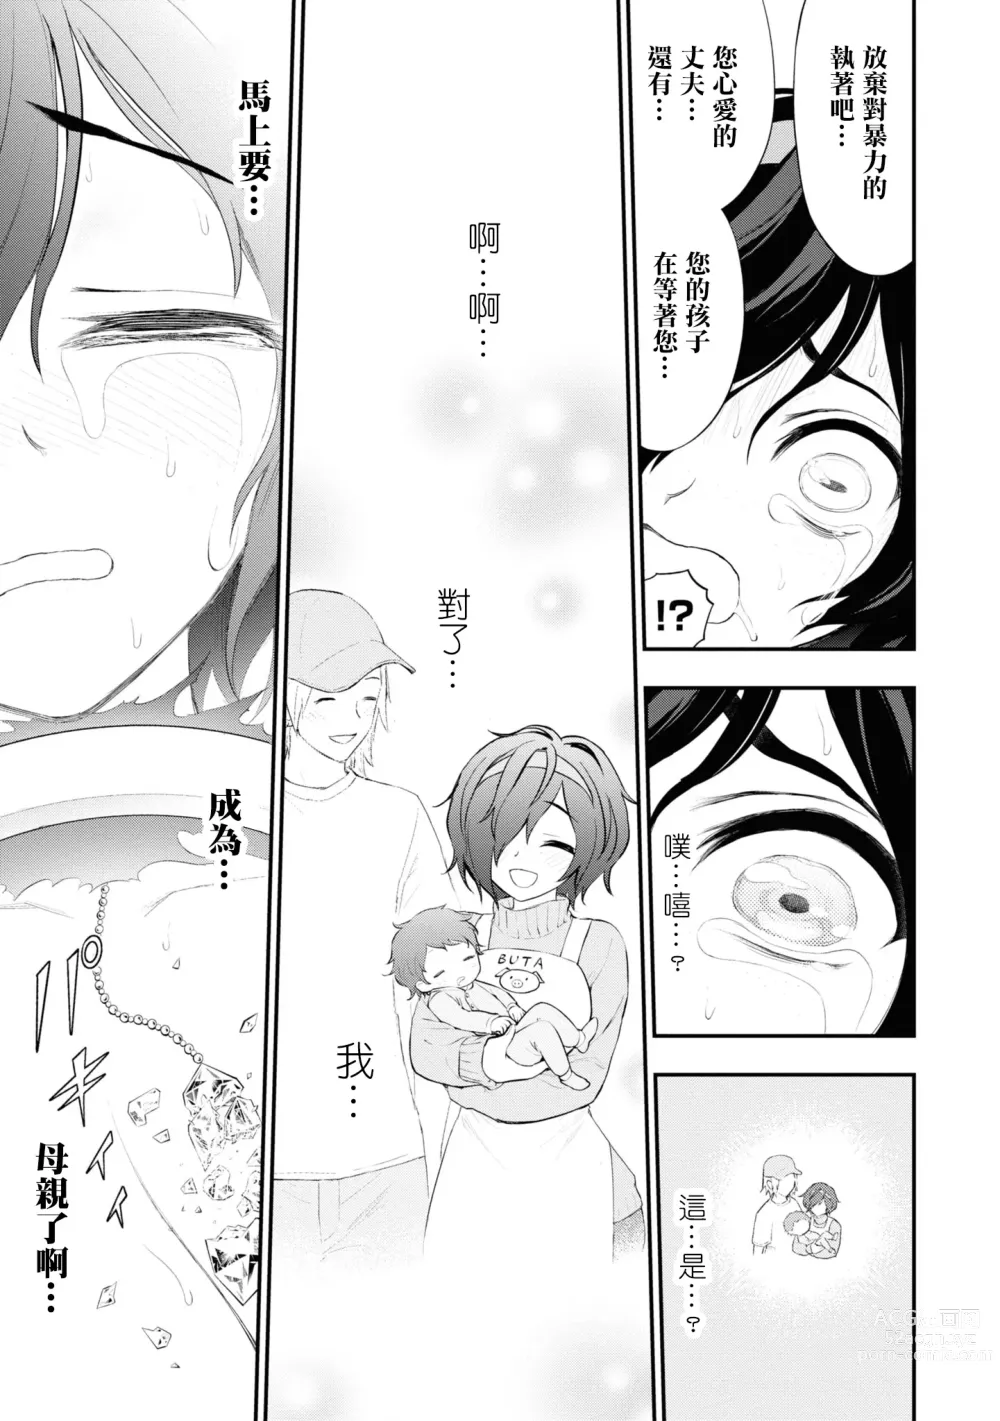 Page 124 of manga 淫獄小區 15-19話